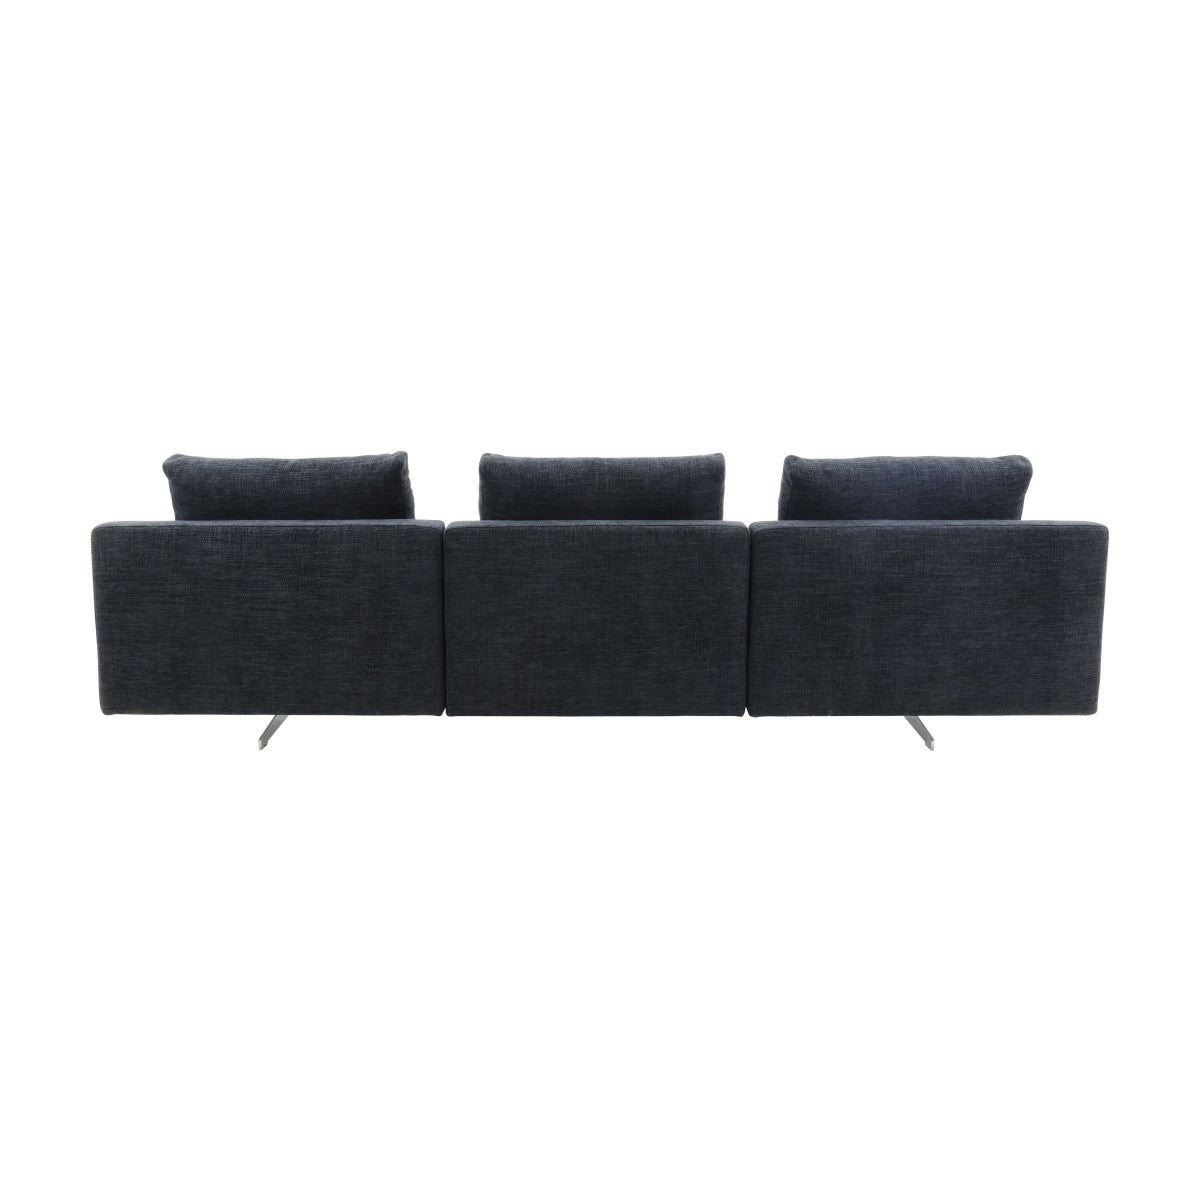 Sinema Bespoke Upholstered Modern Style Five Seater Sofa MS9032G Custom Made To Order